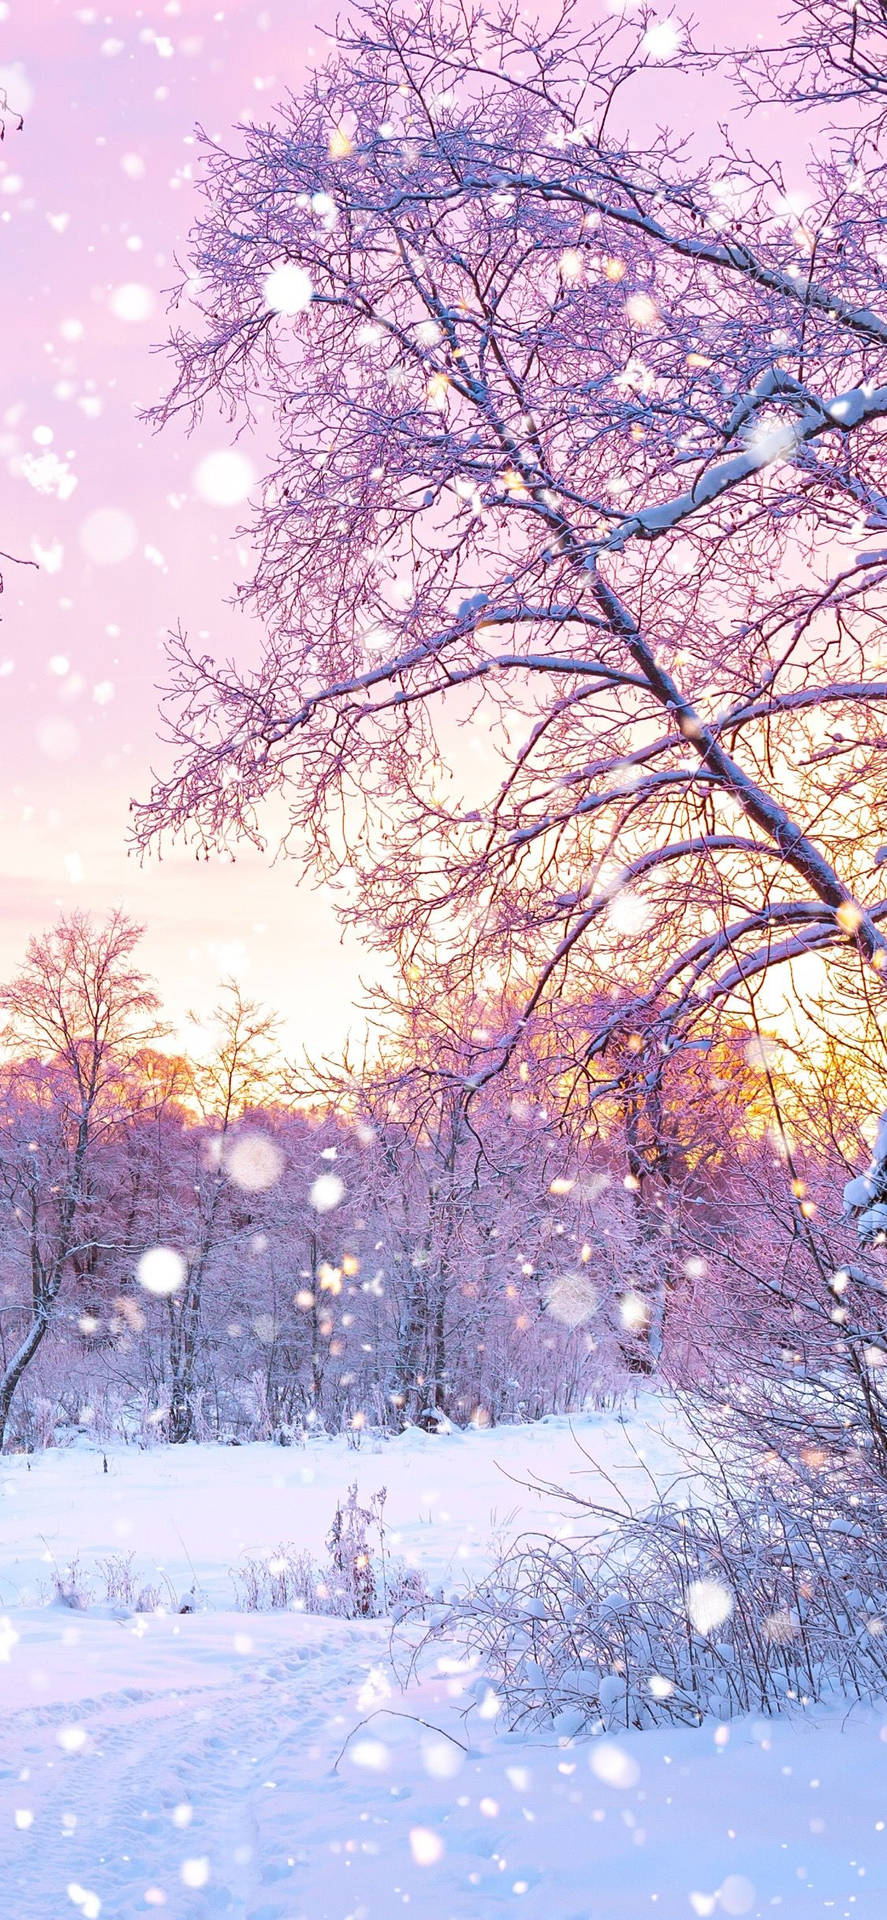 Free Cute Winter Iphone Wallpaper Downloads, [100+] Cute Winter Iphone  Wallpapers for FREE 